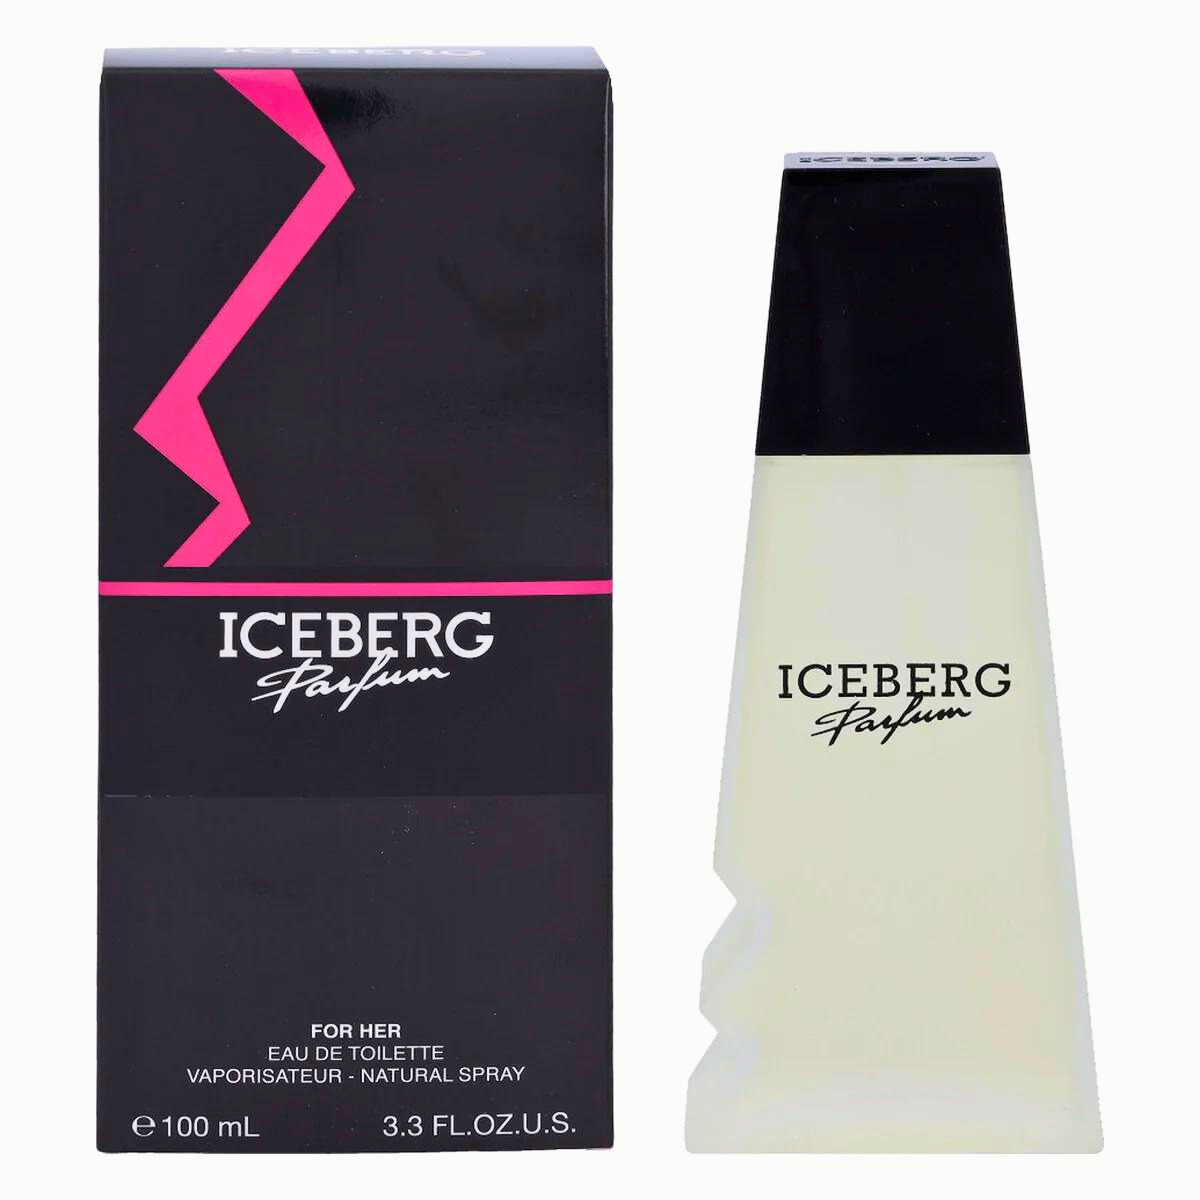 Iceberg Parfum EDT L